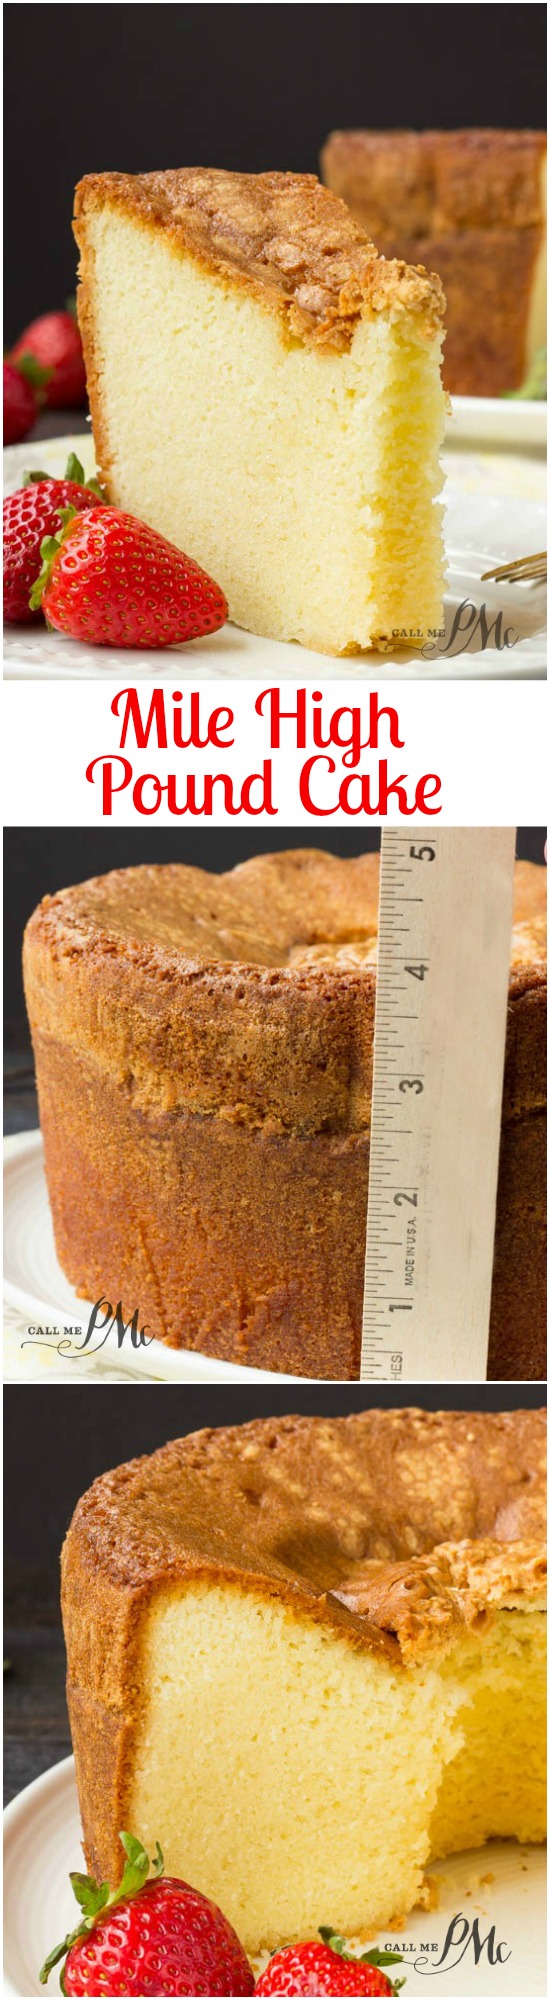 Nine Egg Pound Cake Recipe by Jarrod Milstead - Cookpad